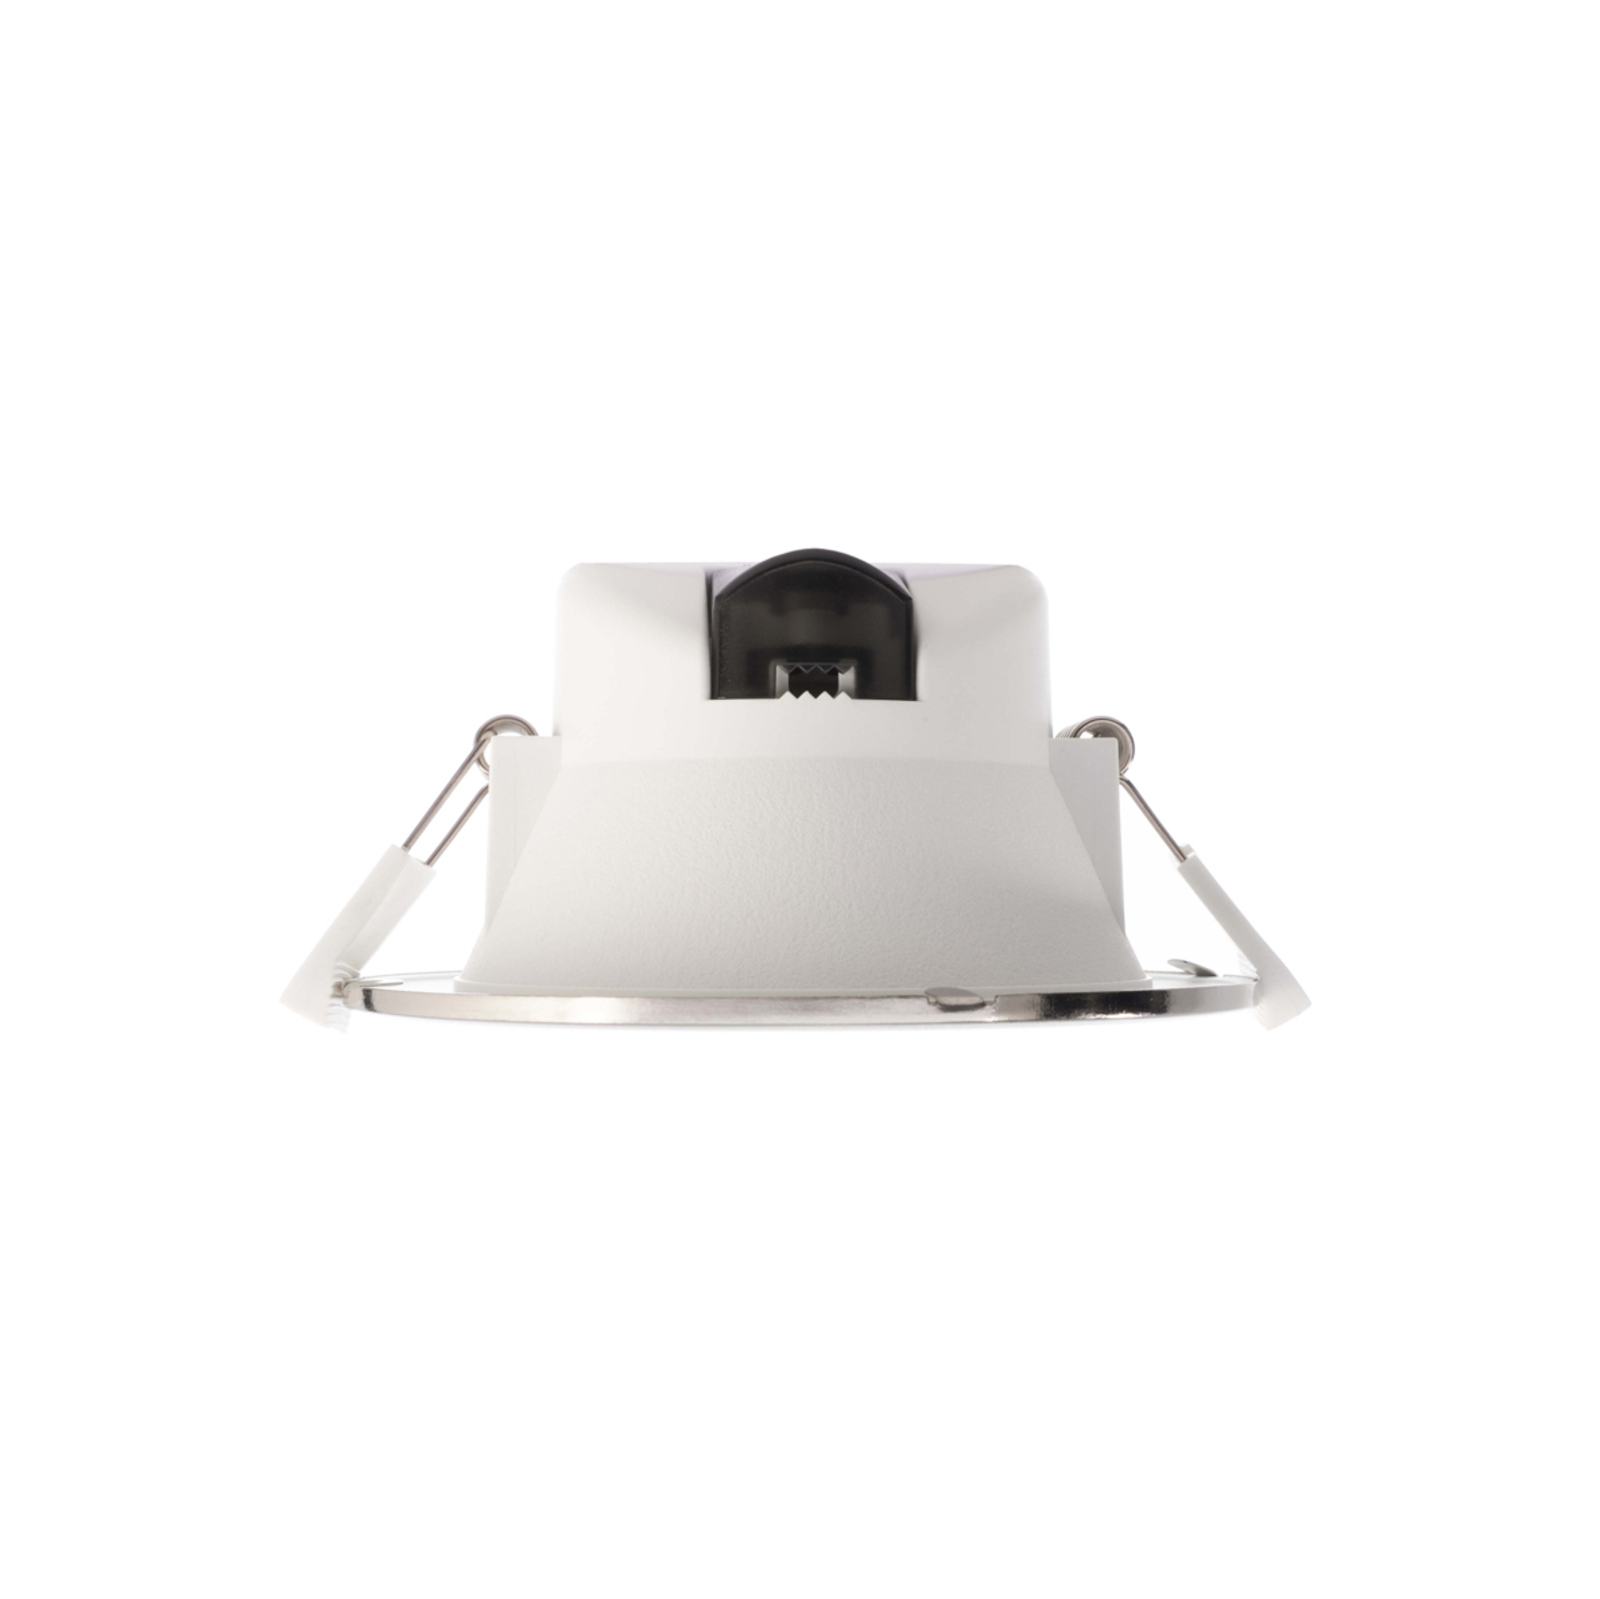 Acrux 145 LED-indbygningslampe, hvid, Ø 17,4 cm